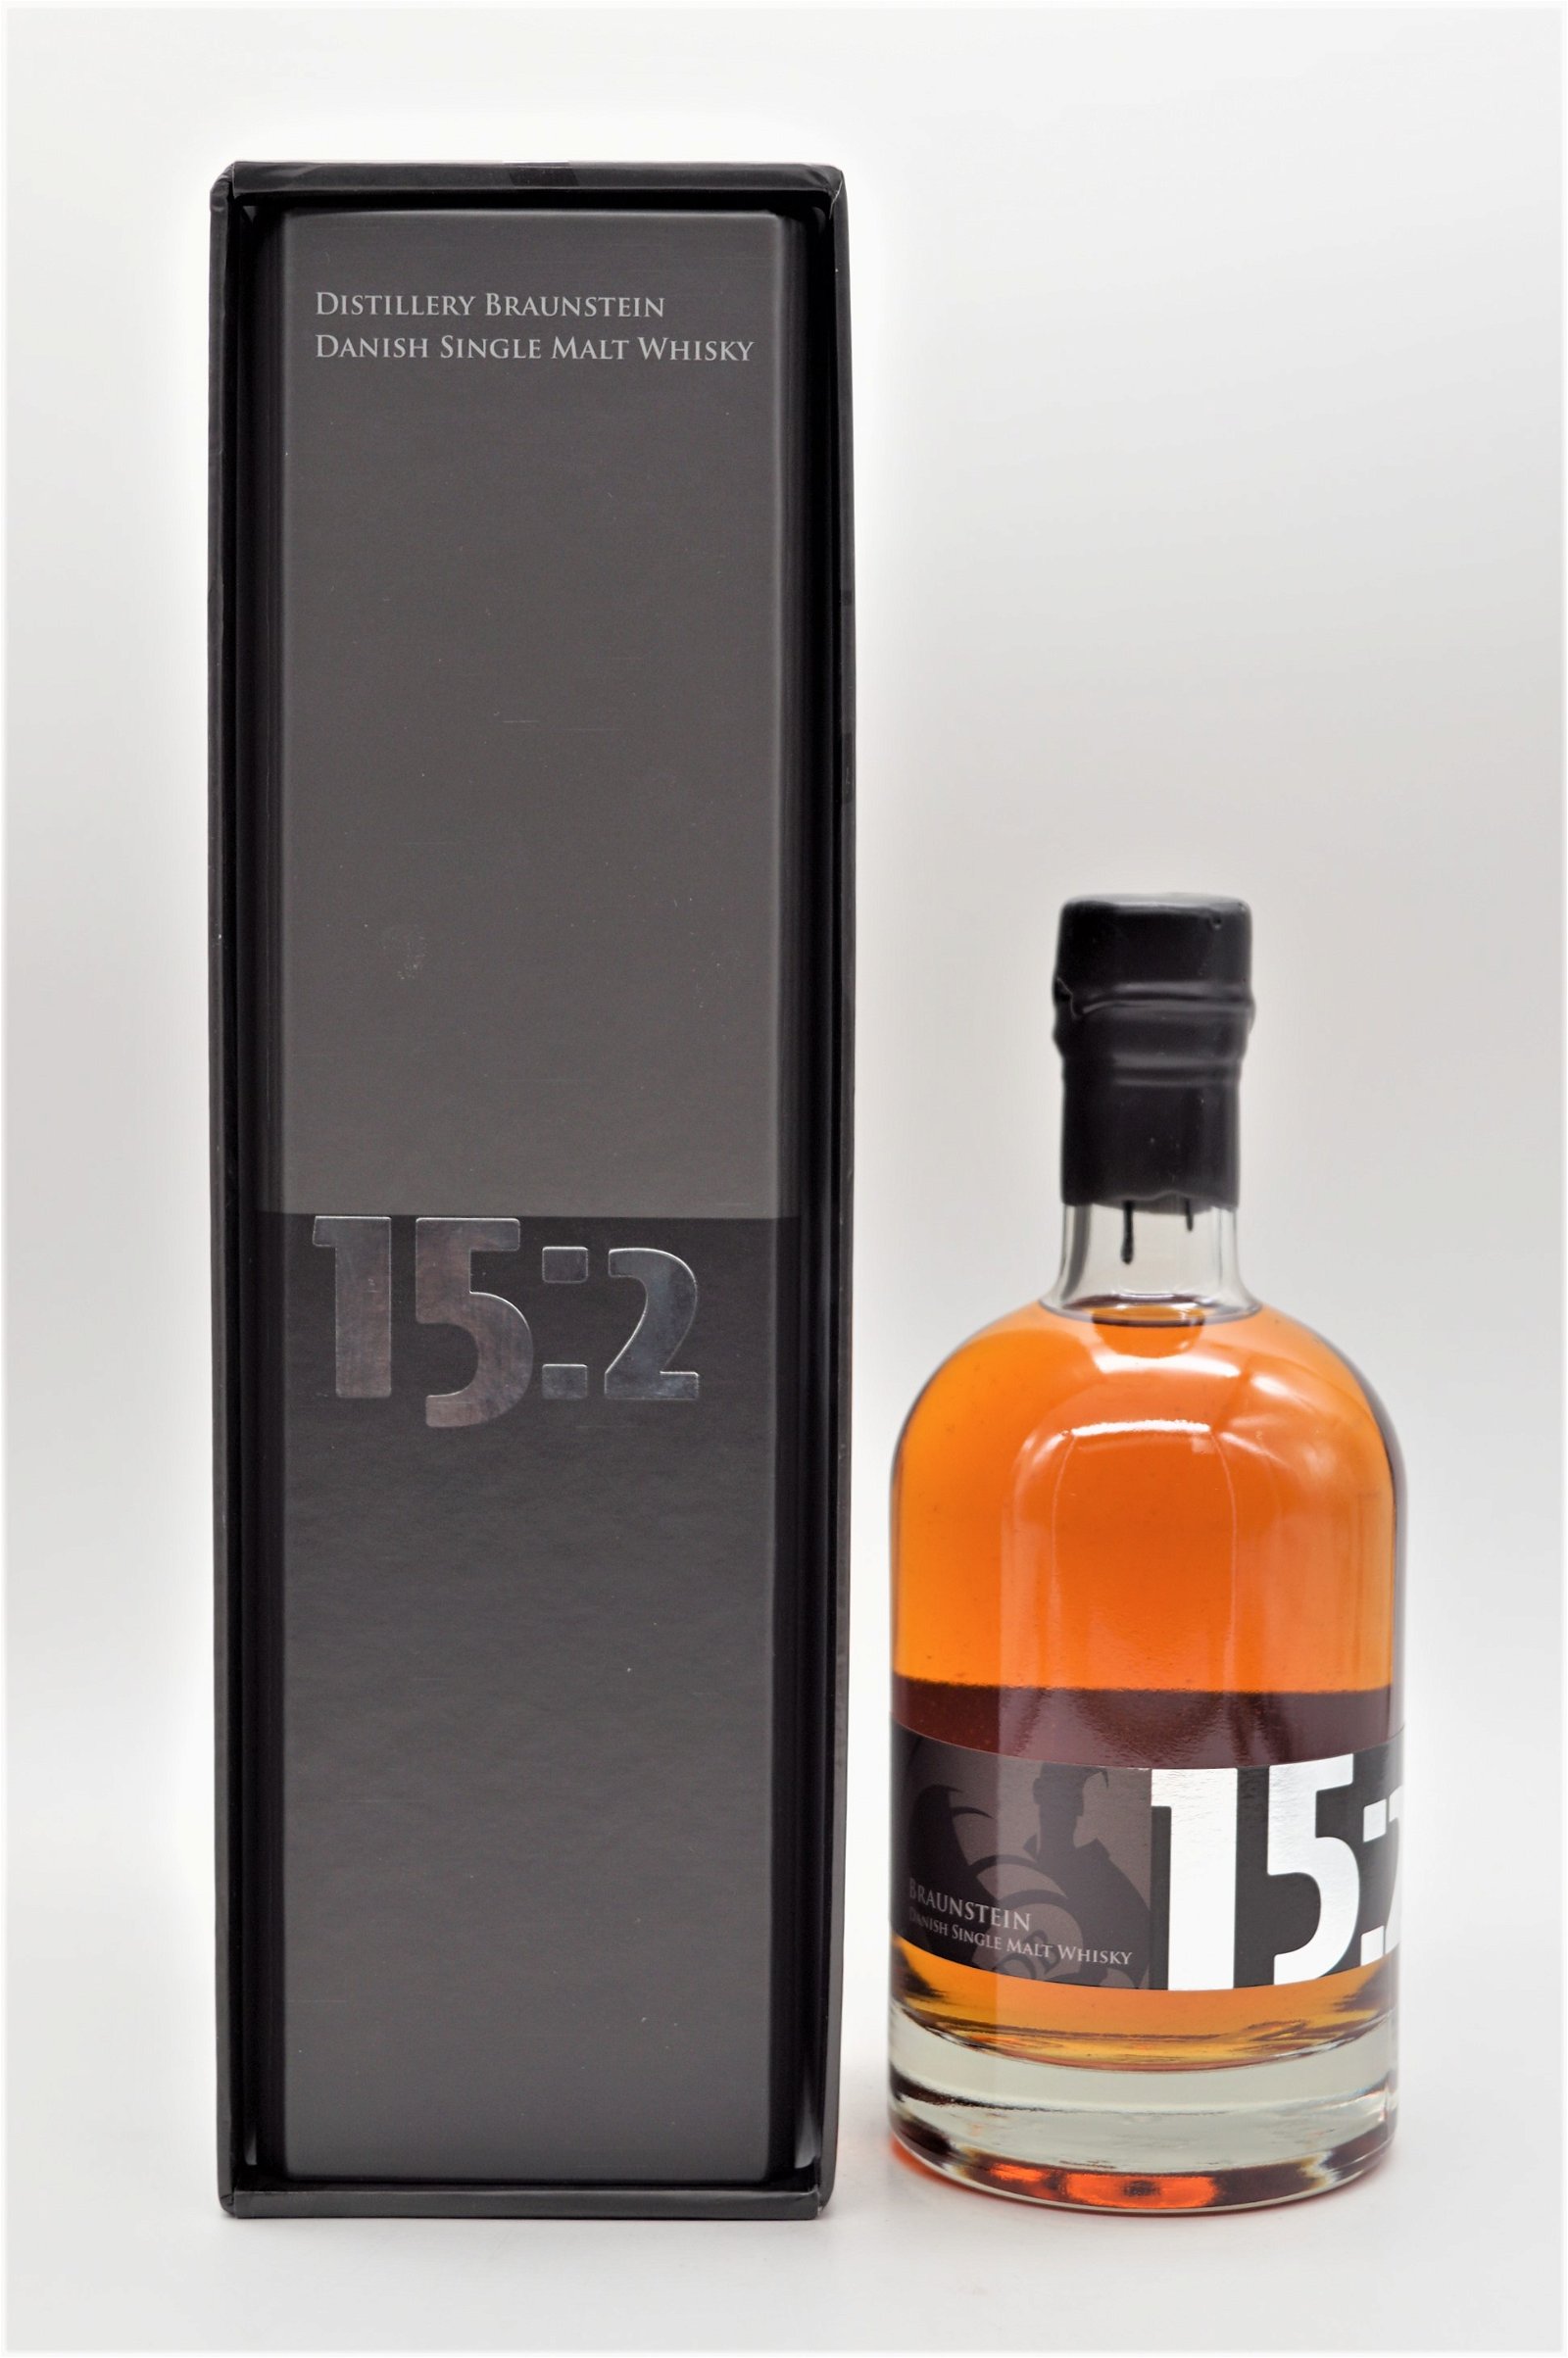 Braunstein Libary Collection 15:2 Dansk Single Malt Whisky